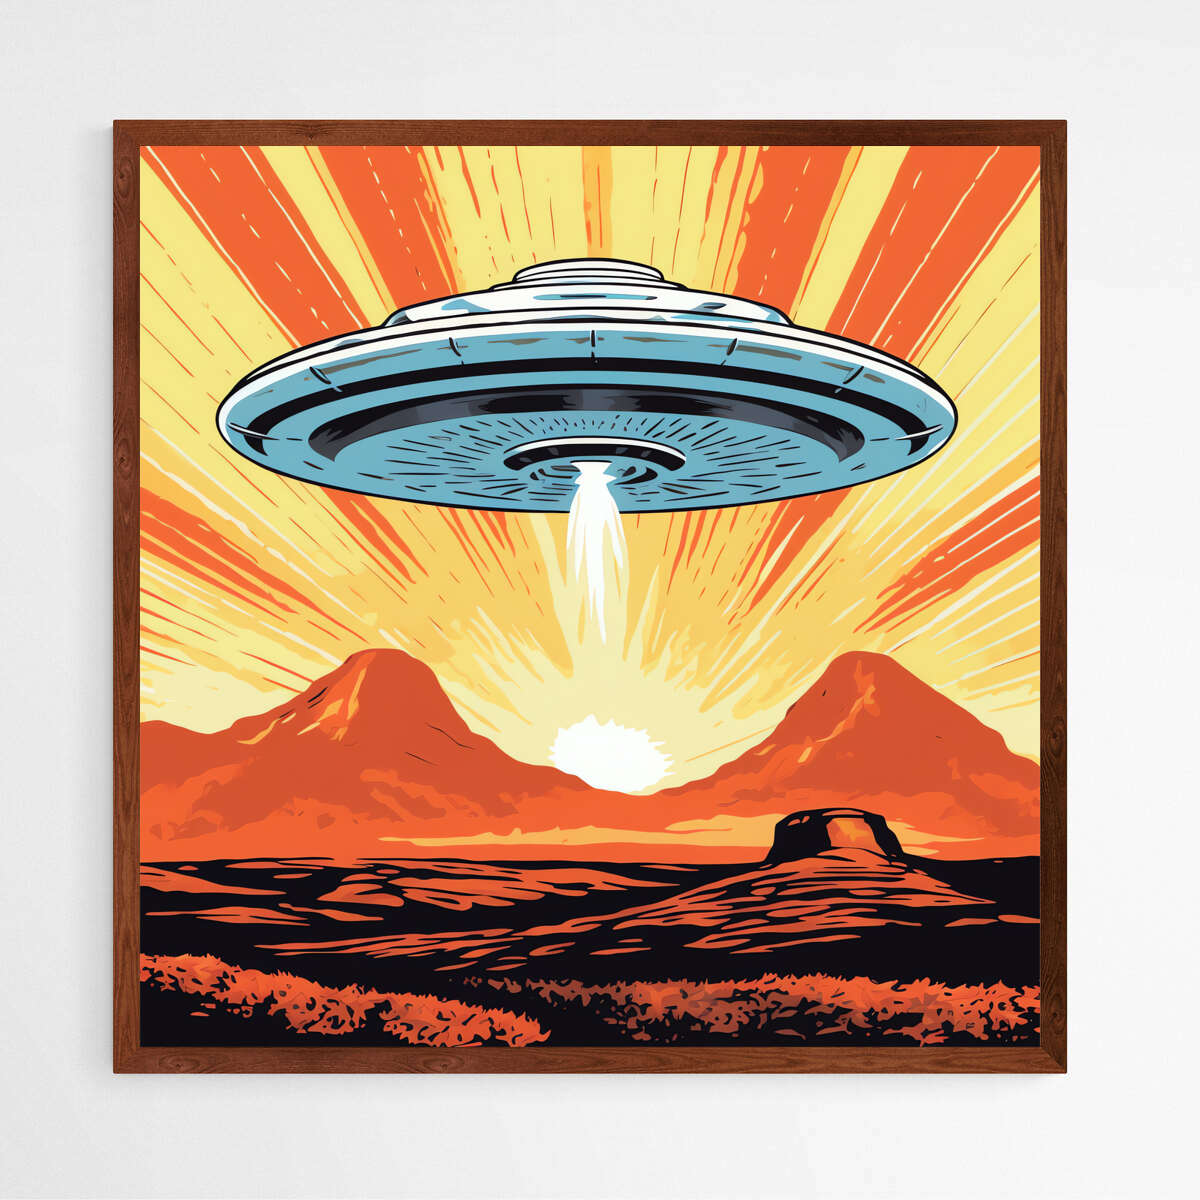 Cosmic Encounter UFO | Pop Art Wall Art Prints - The Canvas Hive